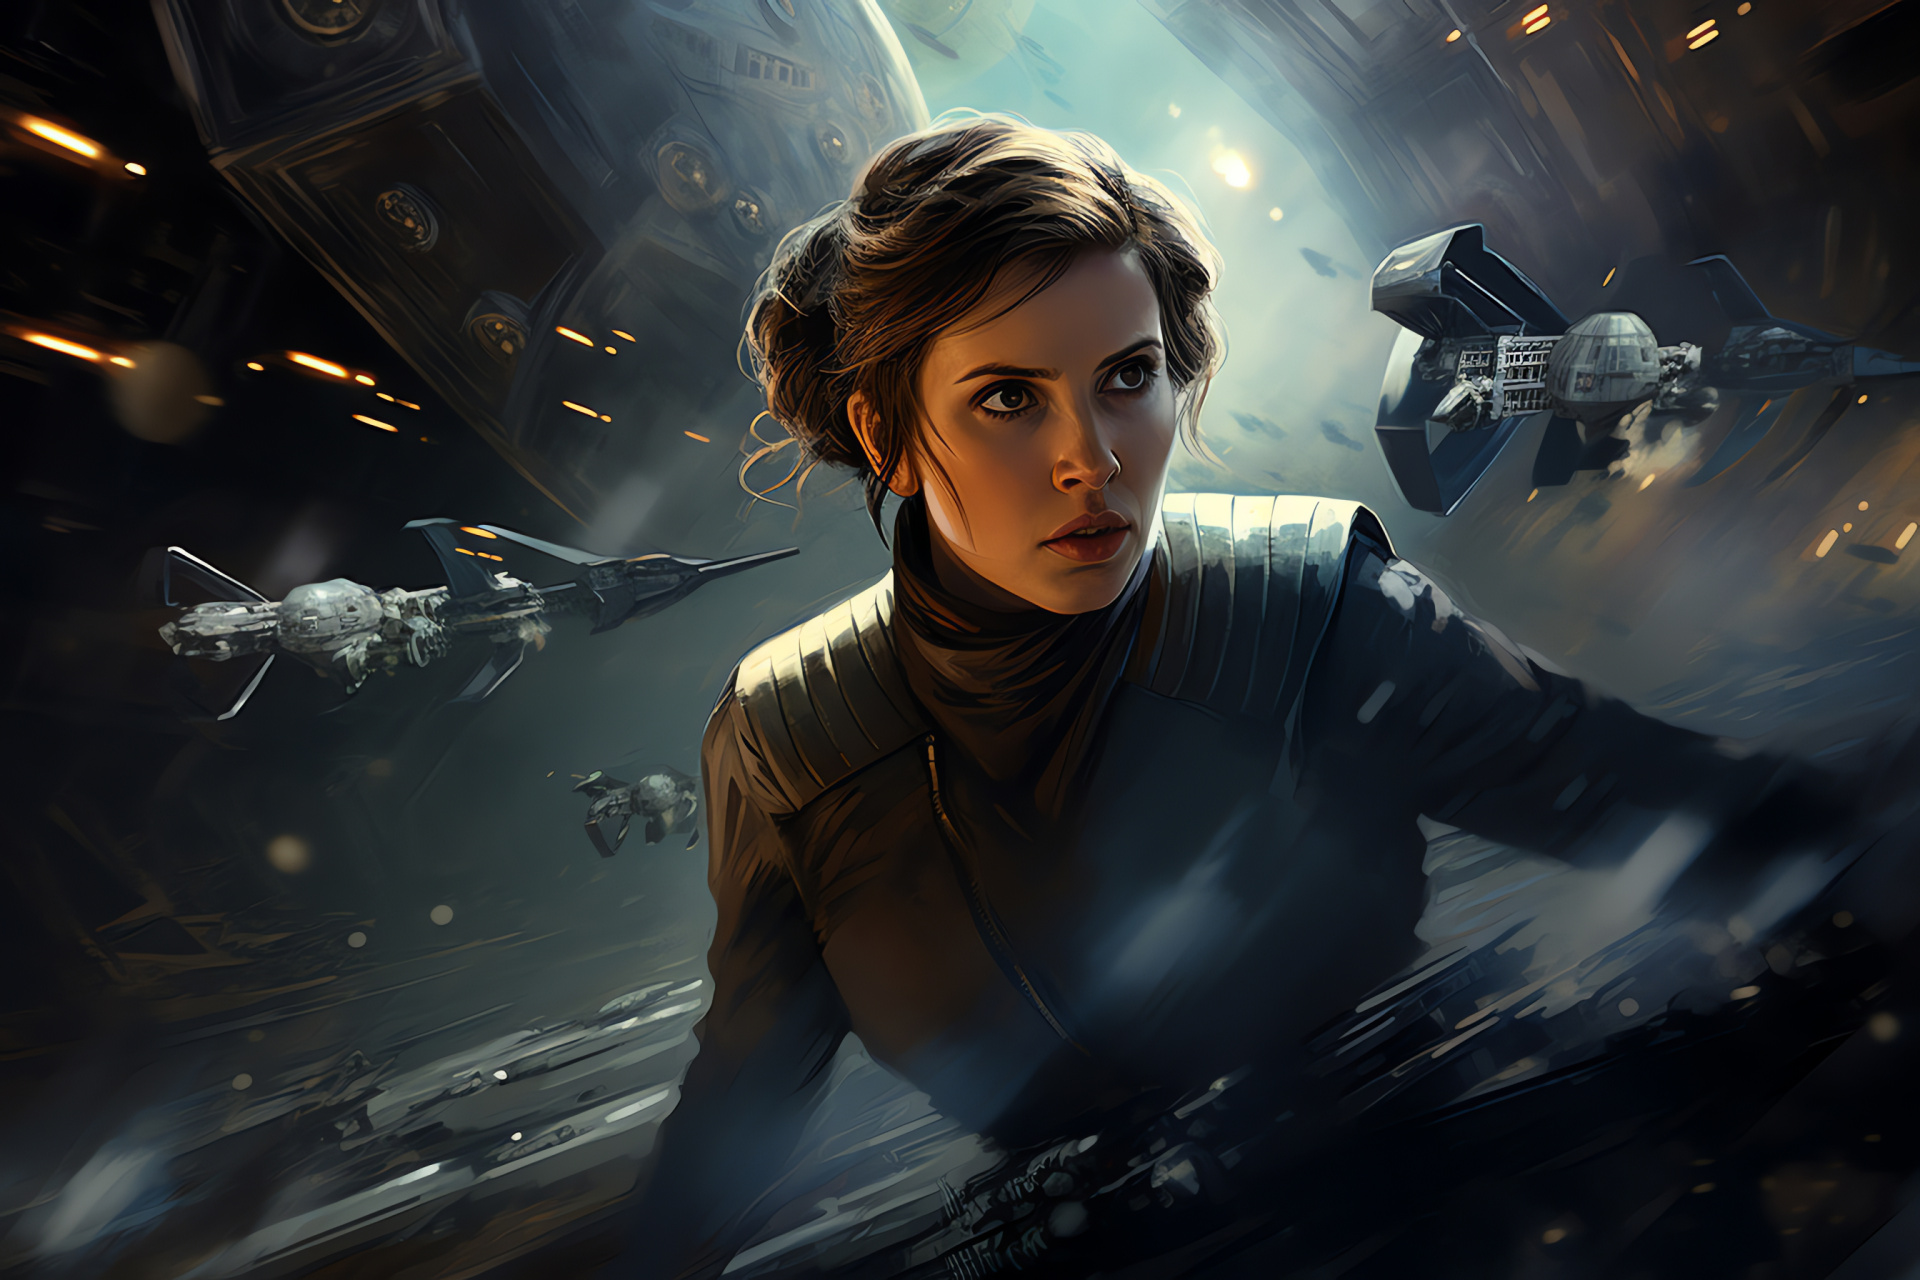 Princess Leia pilot, Mid-flight action, Star Wars fighter craft, Adept combat maneuvers, Galactic rebellion, HD Desktop Wallpaper